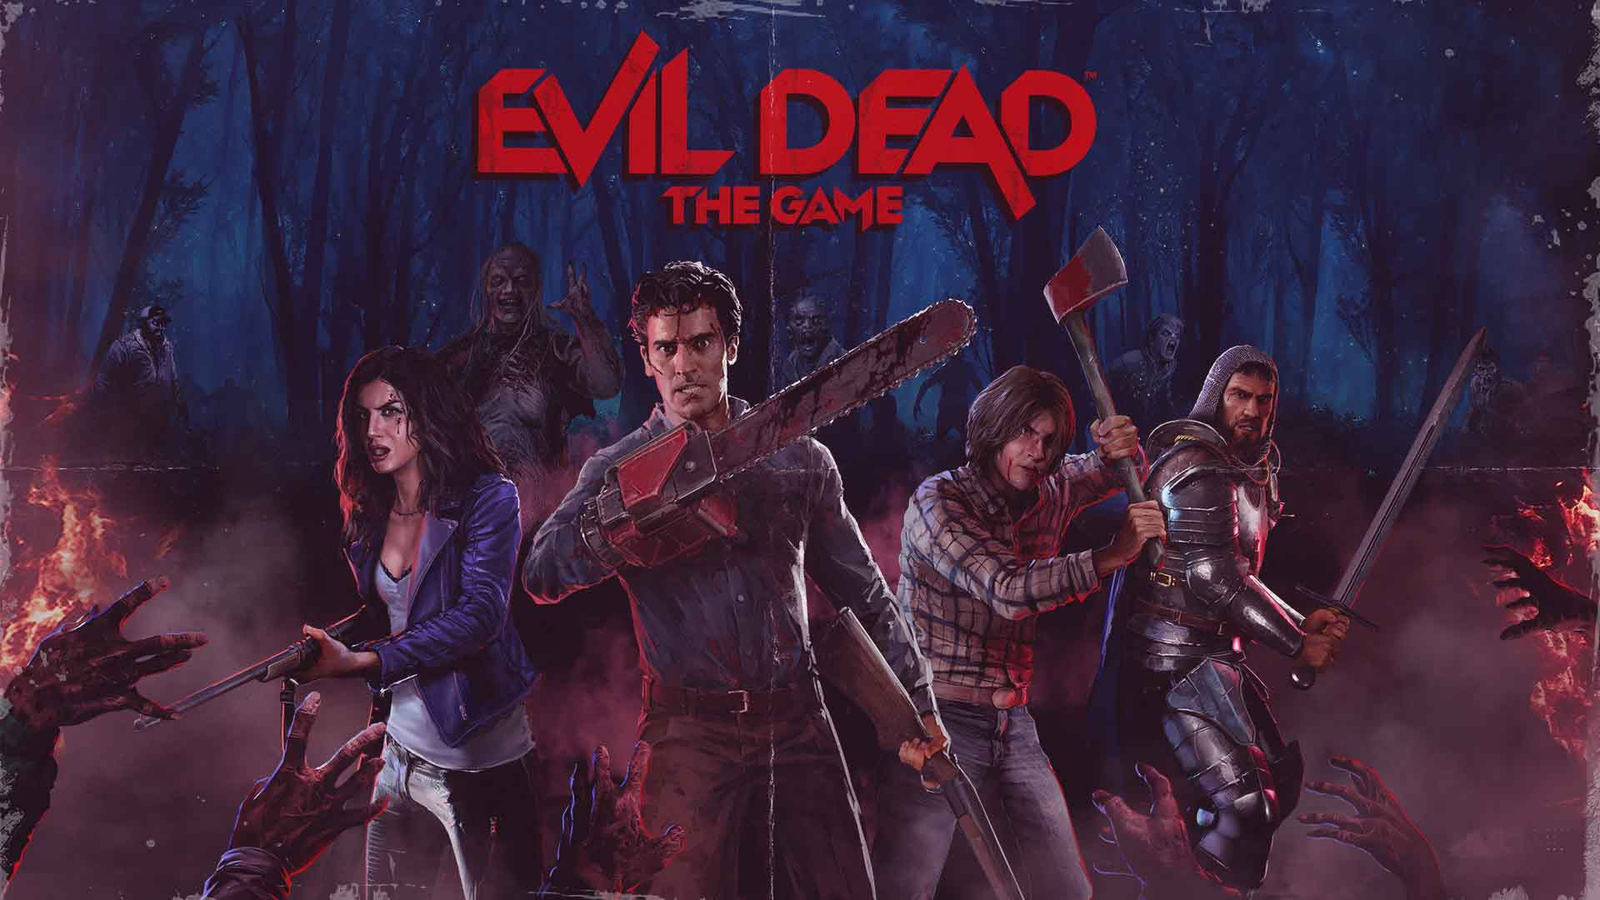 Maximum levels - Basics - Gameplay, Evil Dead: The Game